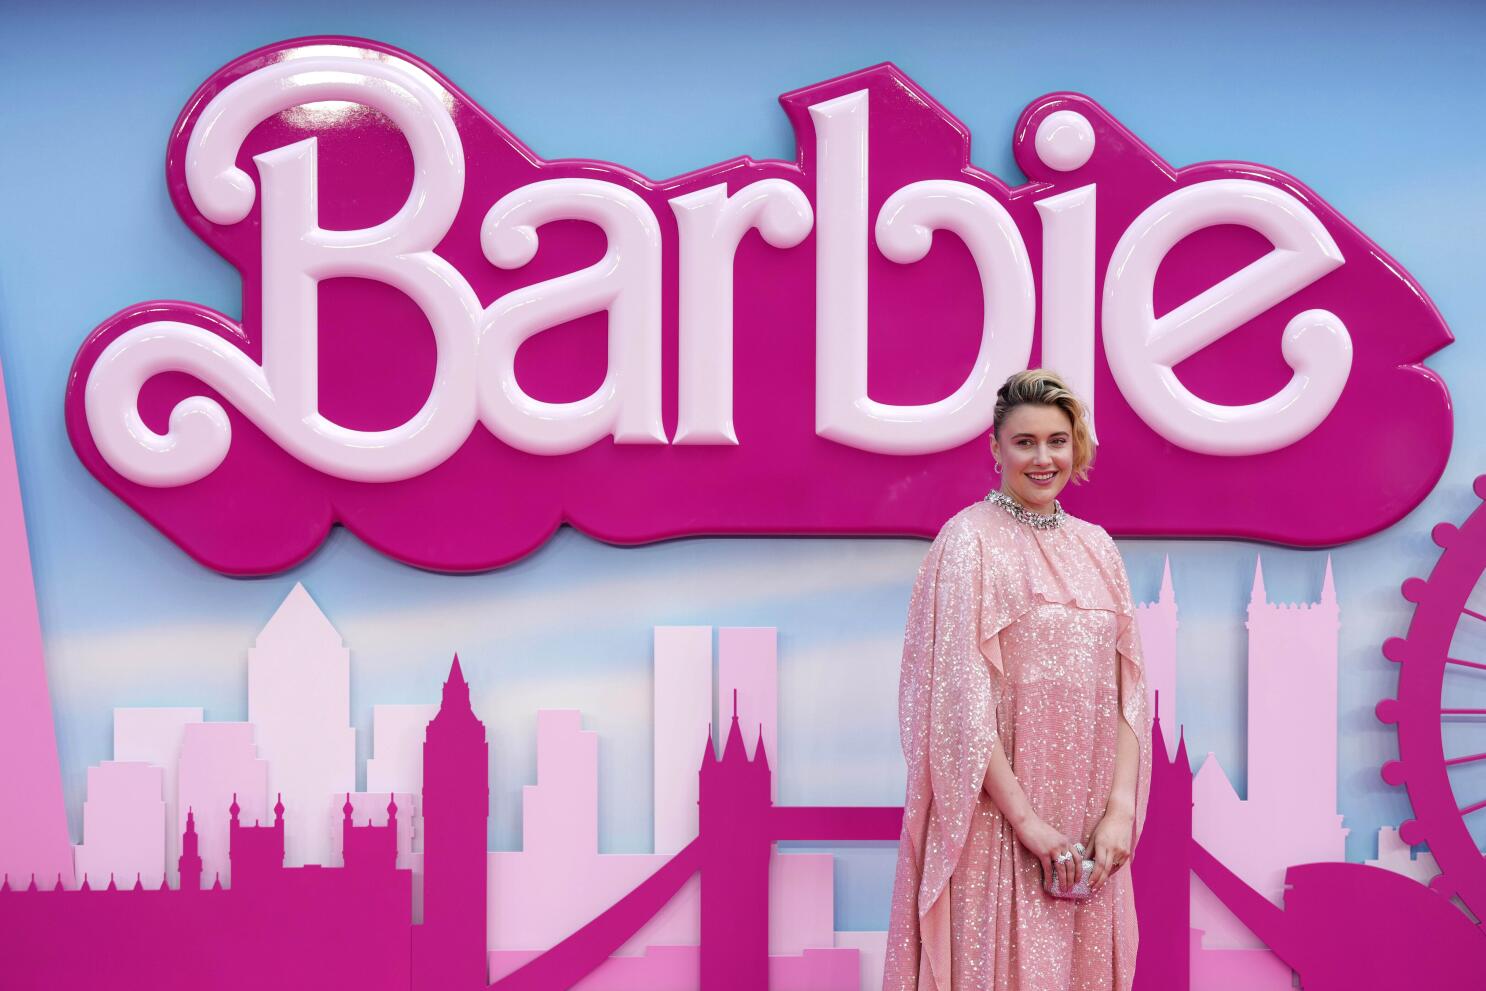 Barbie (película) - Wikipedia, la enciclopedia libre